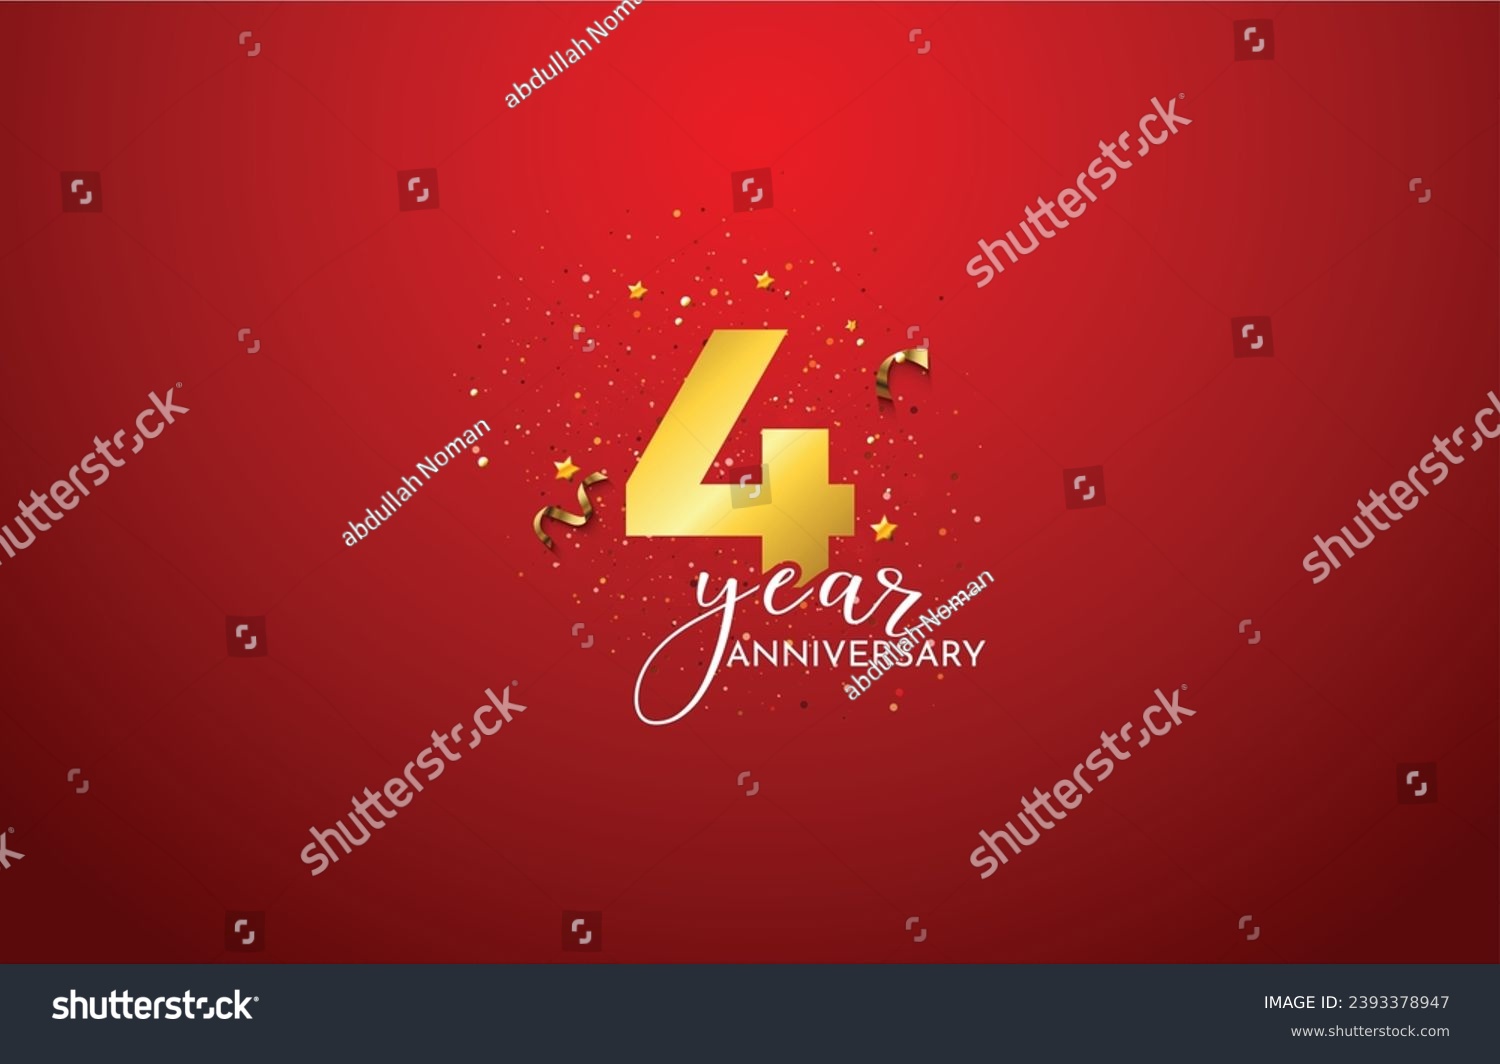 SVG of Fourth 4th Anniversary celebration, 4 Anniversary celebration, Realistic 3d sign, RED background, stars, festive illustration, golden, Golden number 4 sparkling confetti, 4,5  svg